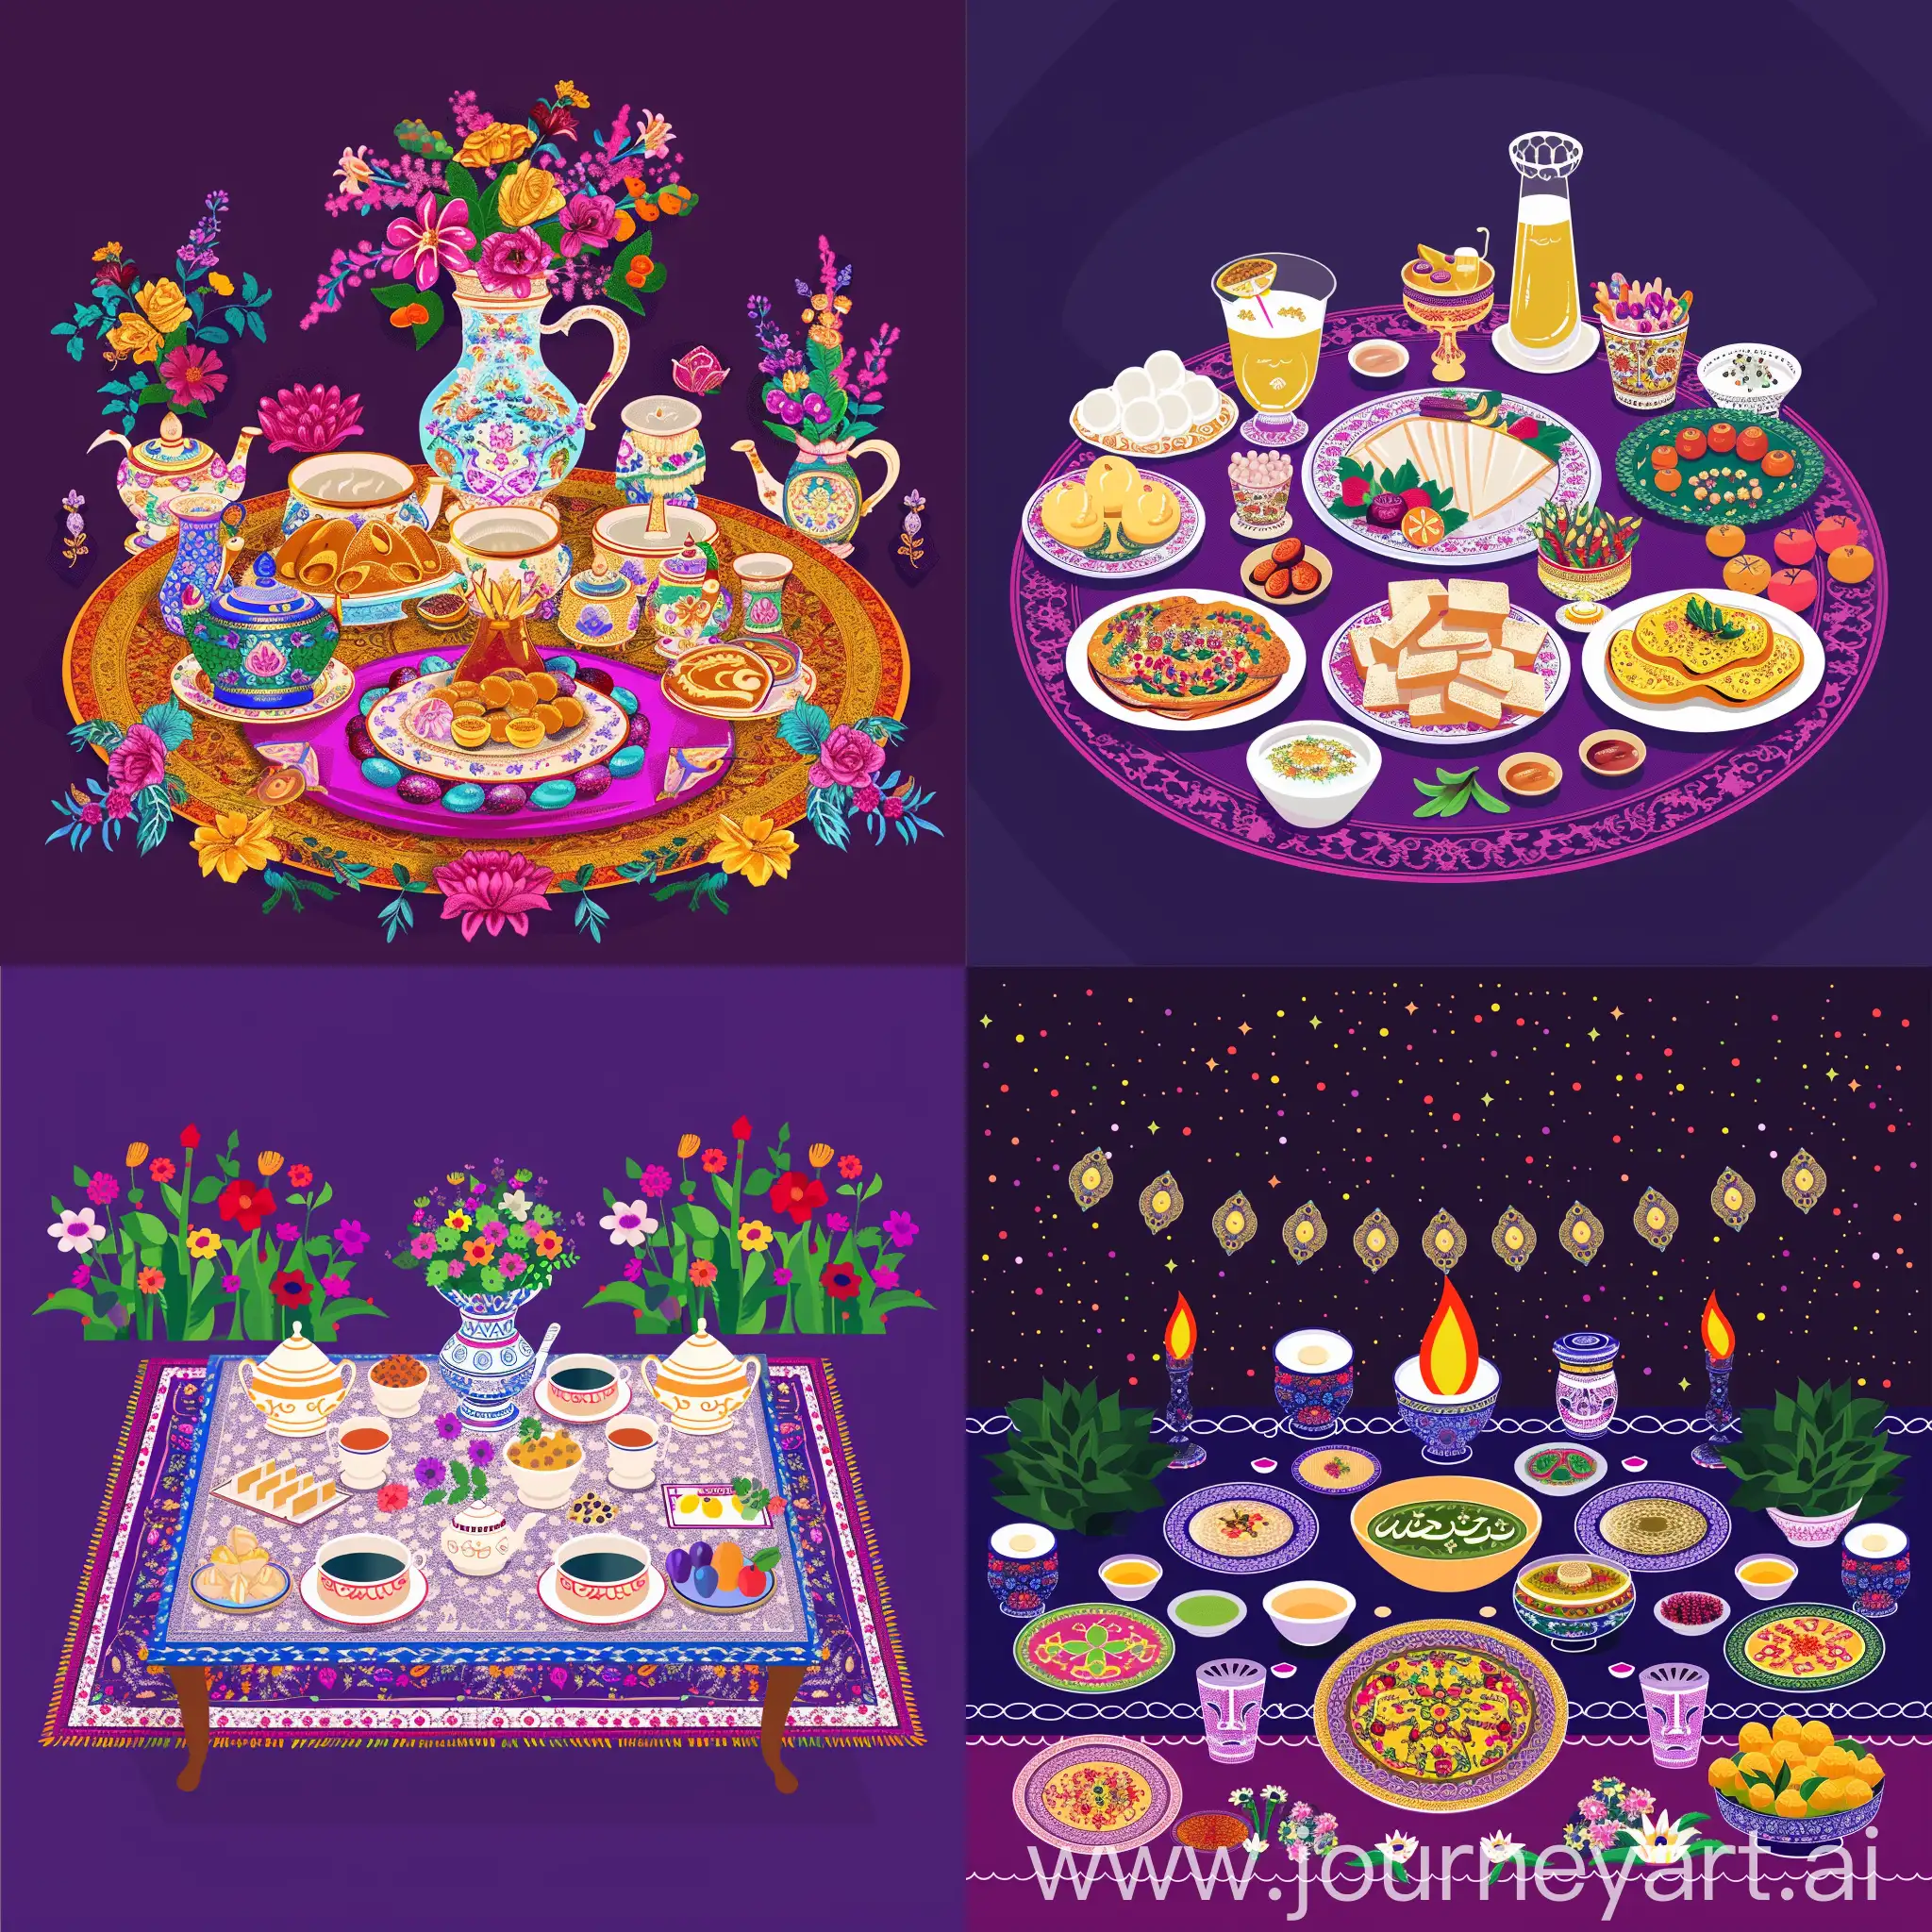 Elegant-Iranian-Haft-Seen-Table-with-Purple-Background